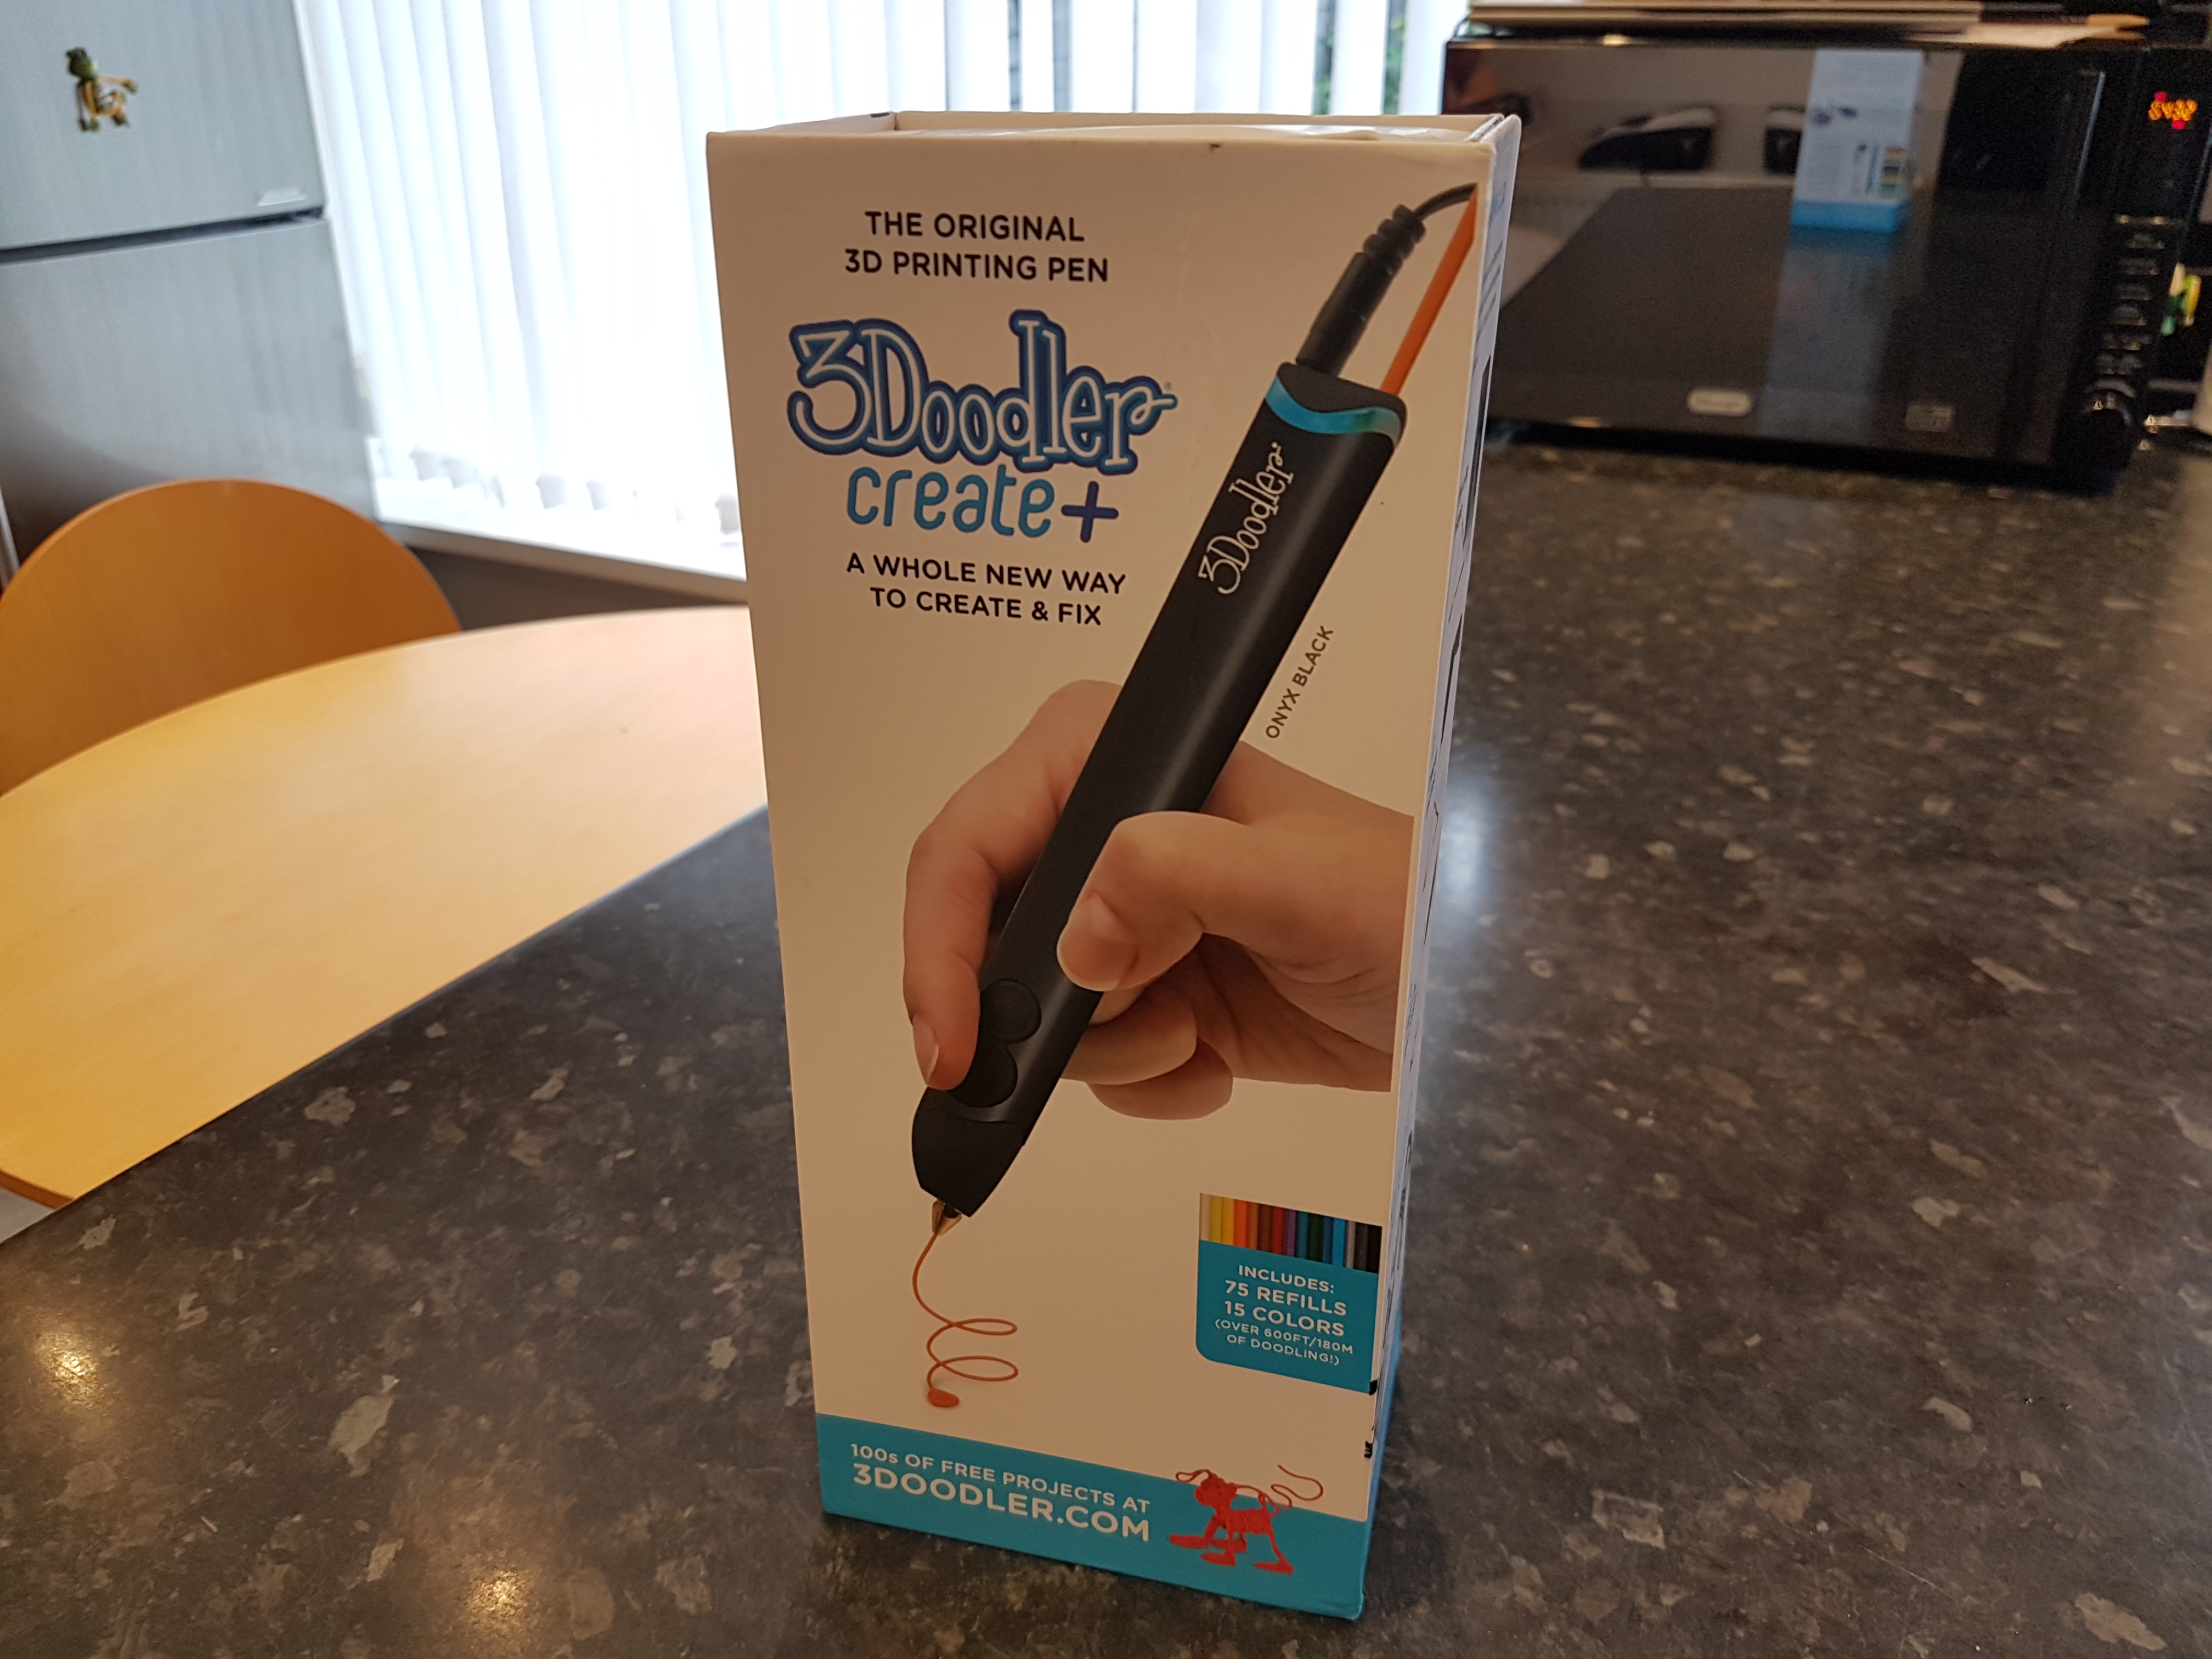 How to Use a 3D Pen? - 3Doodler